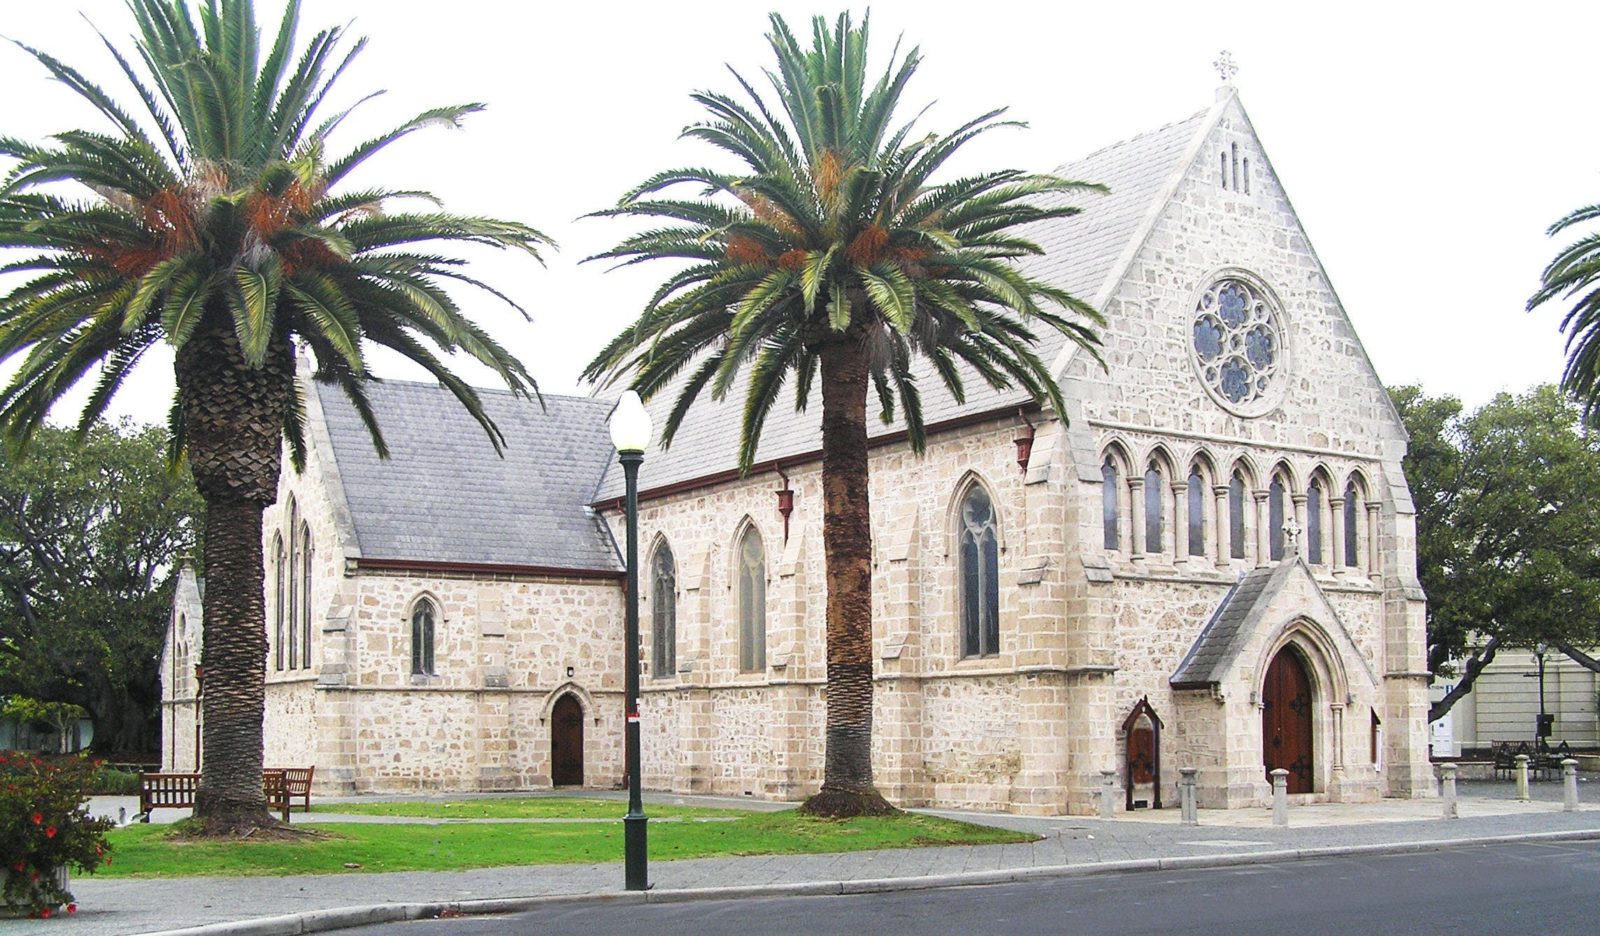 St John's Anglican Church, Fremantle, Western Australia